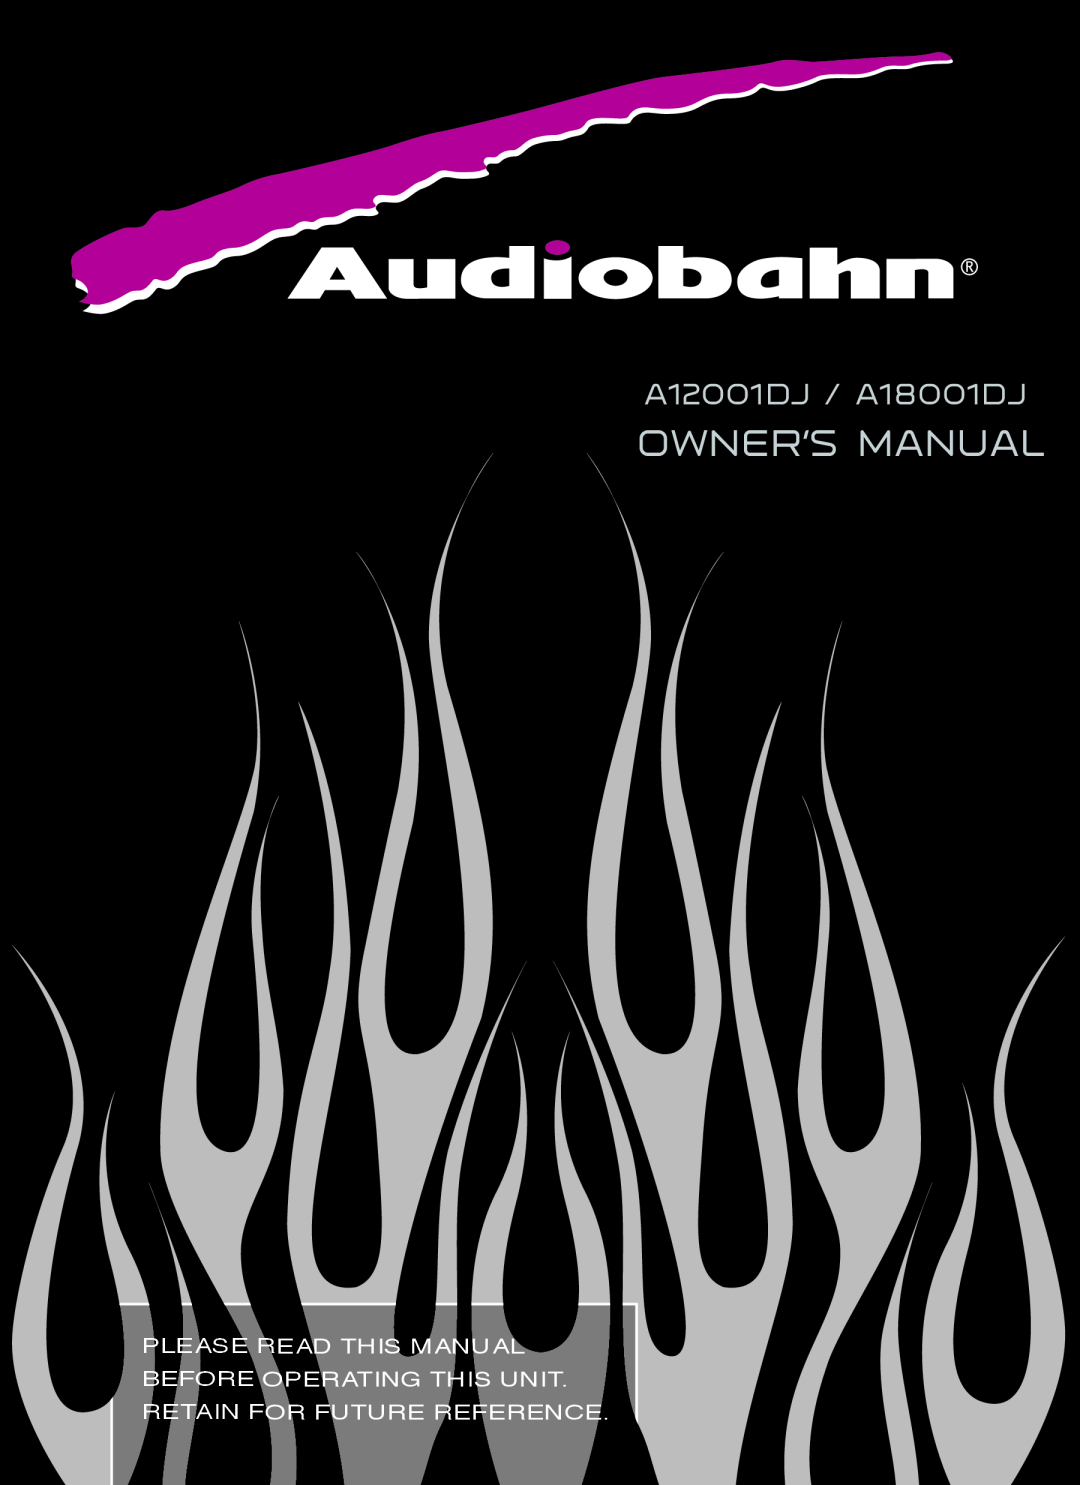 AudioBahn owner manual Owner’S Manual, A12001DJ / A18001DJ 